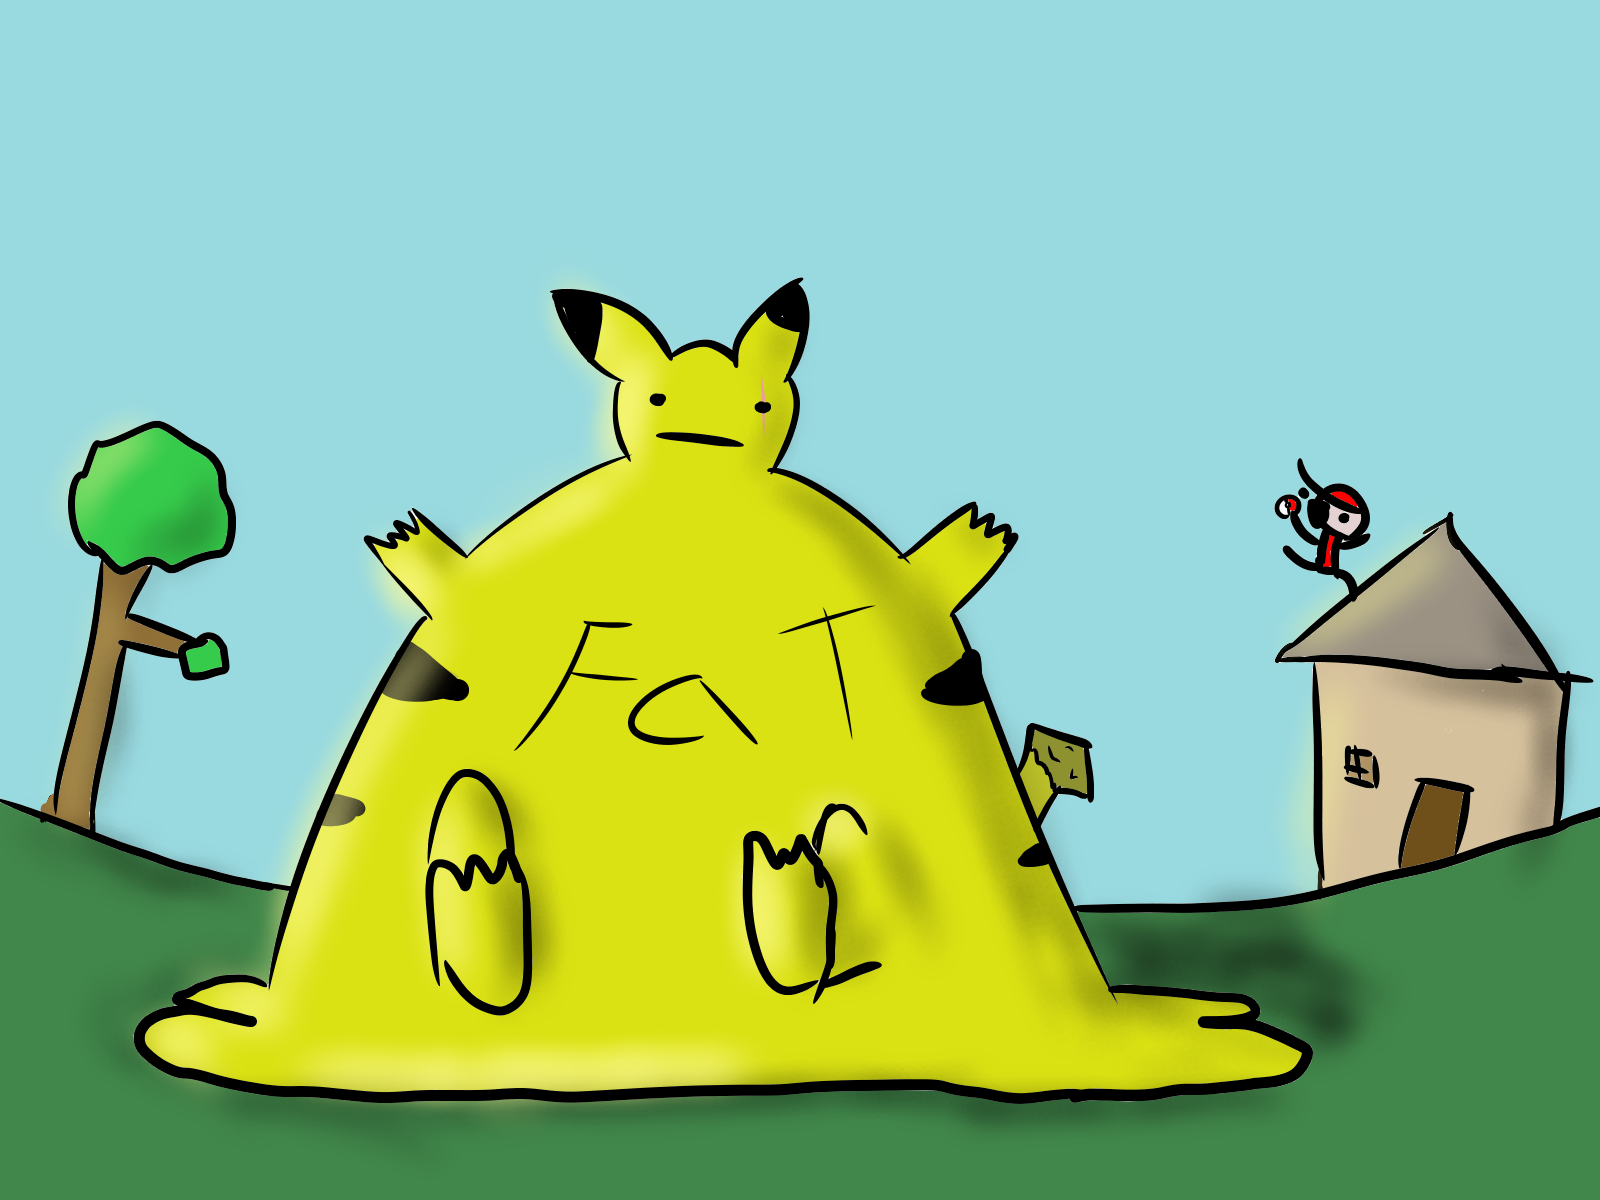 A fat pikachu by Rusker on Newgrounds